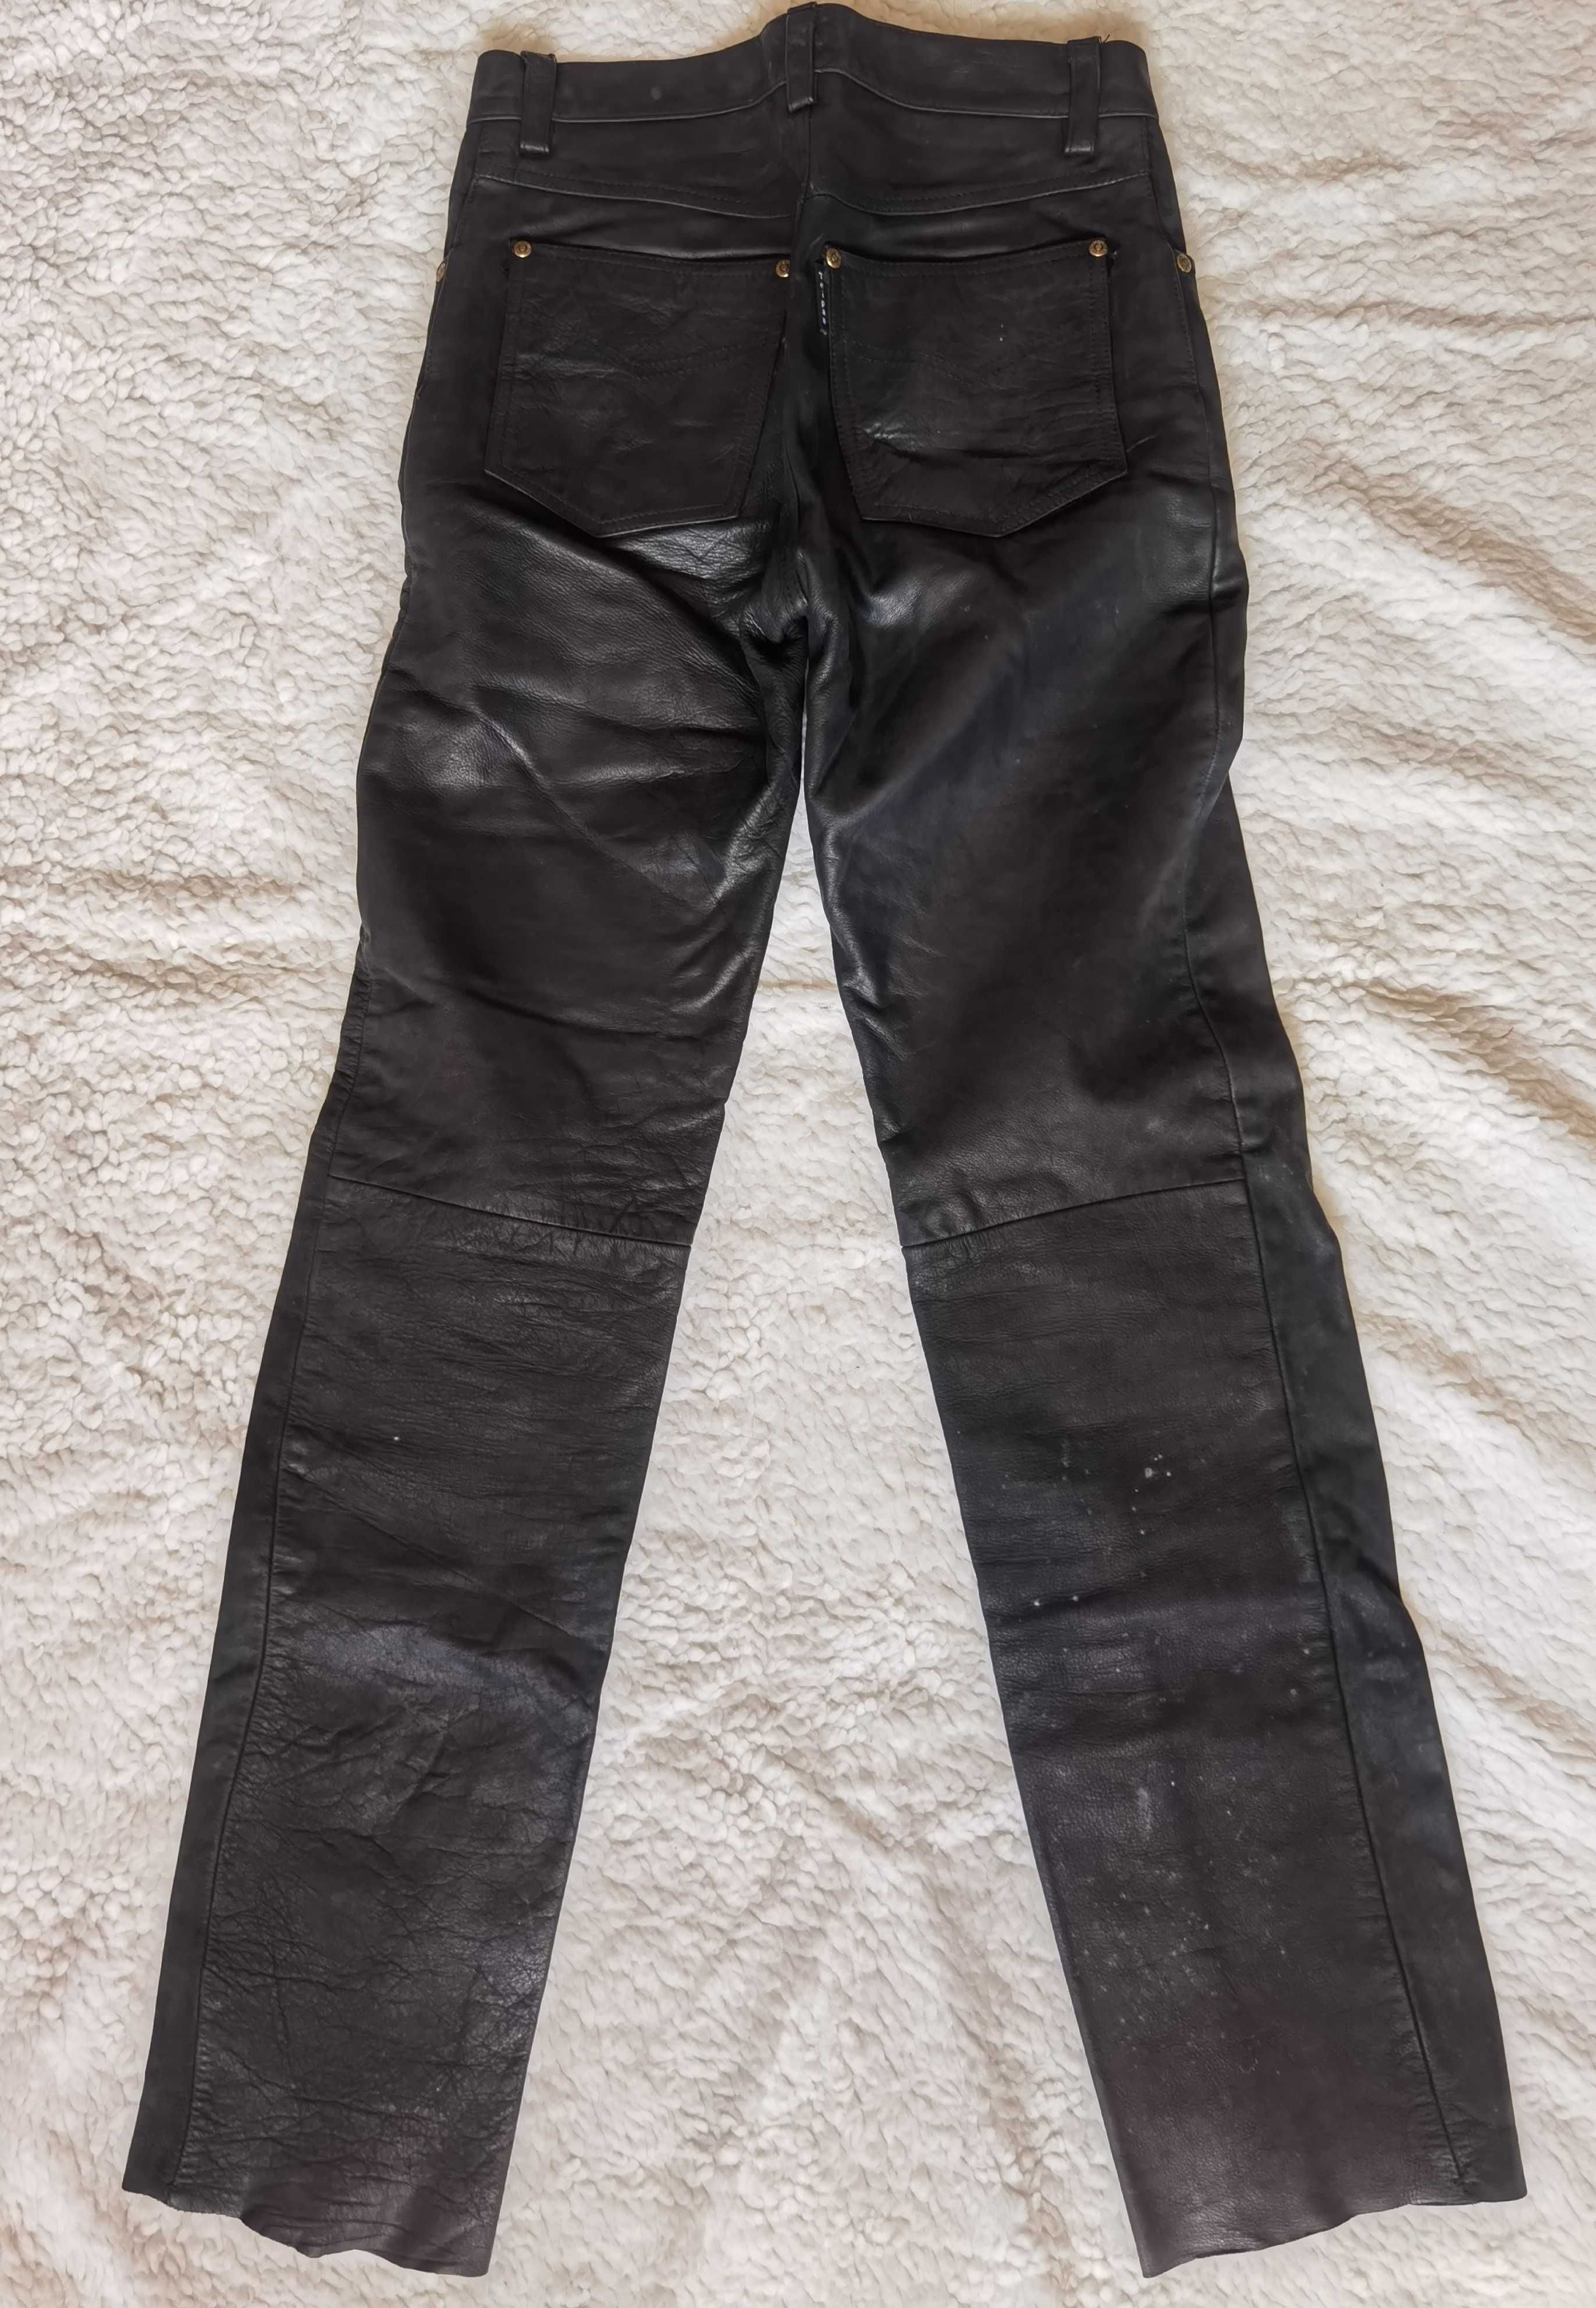 Pantaloni lungi negri barbati) piele naturala 5 buzunare